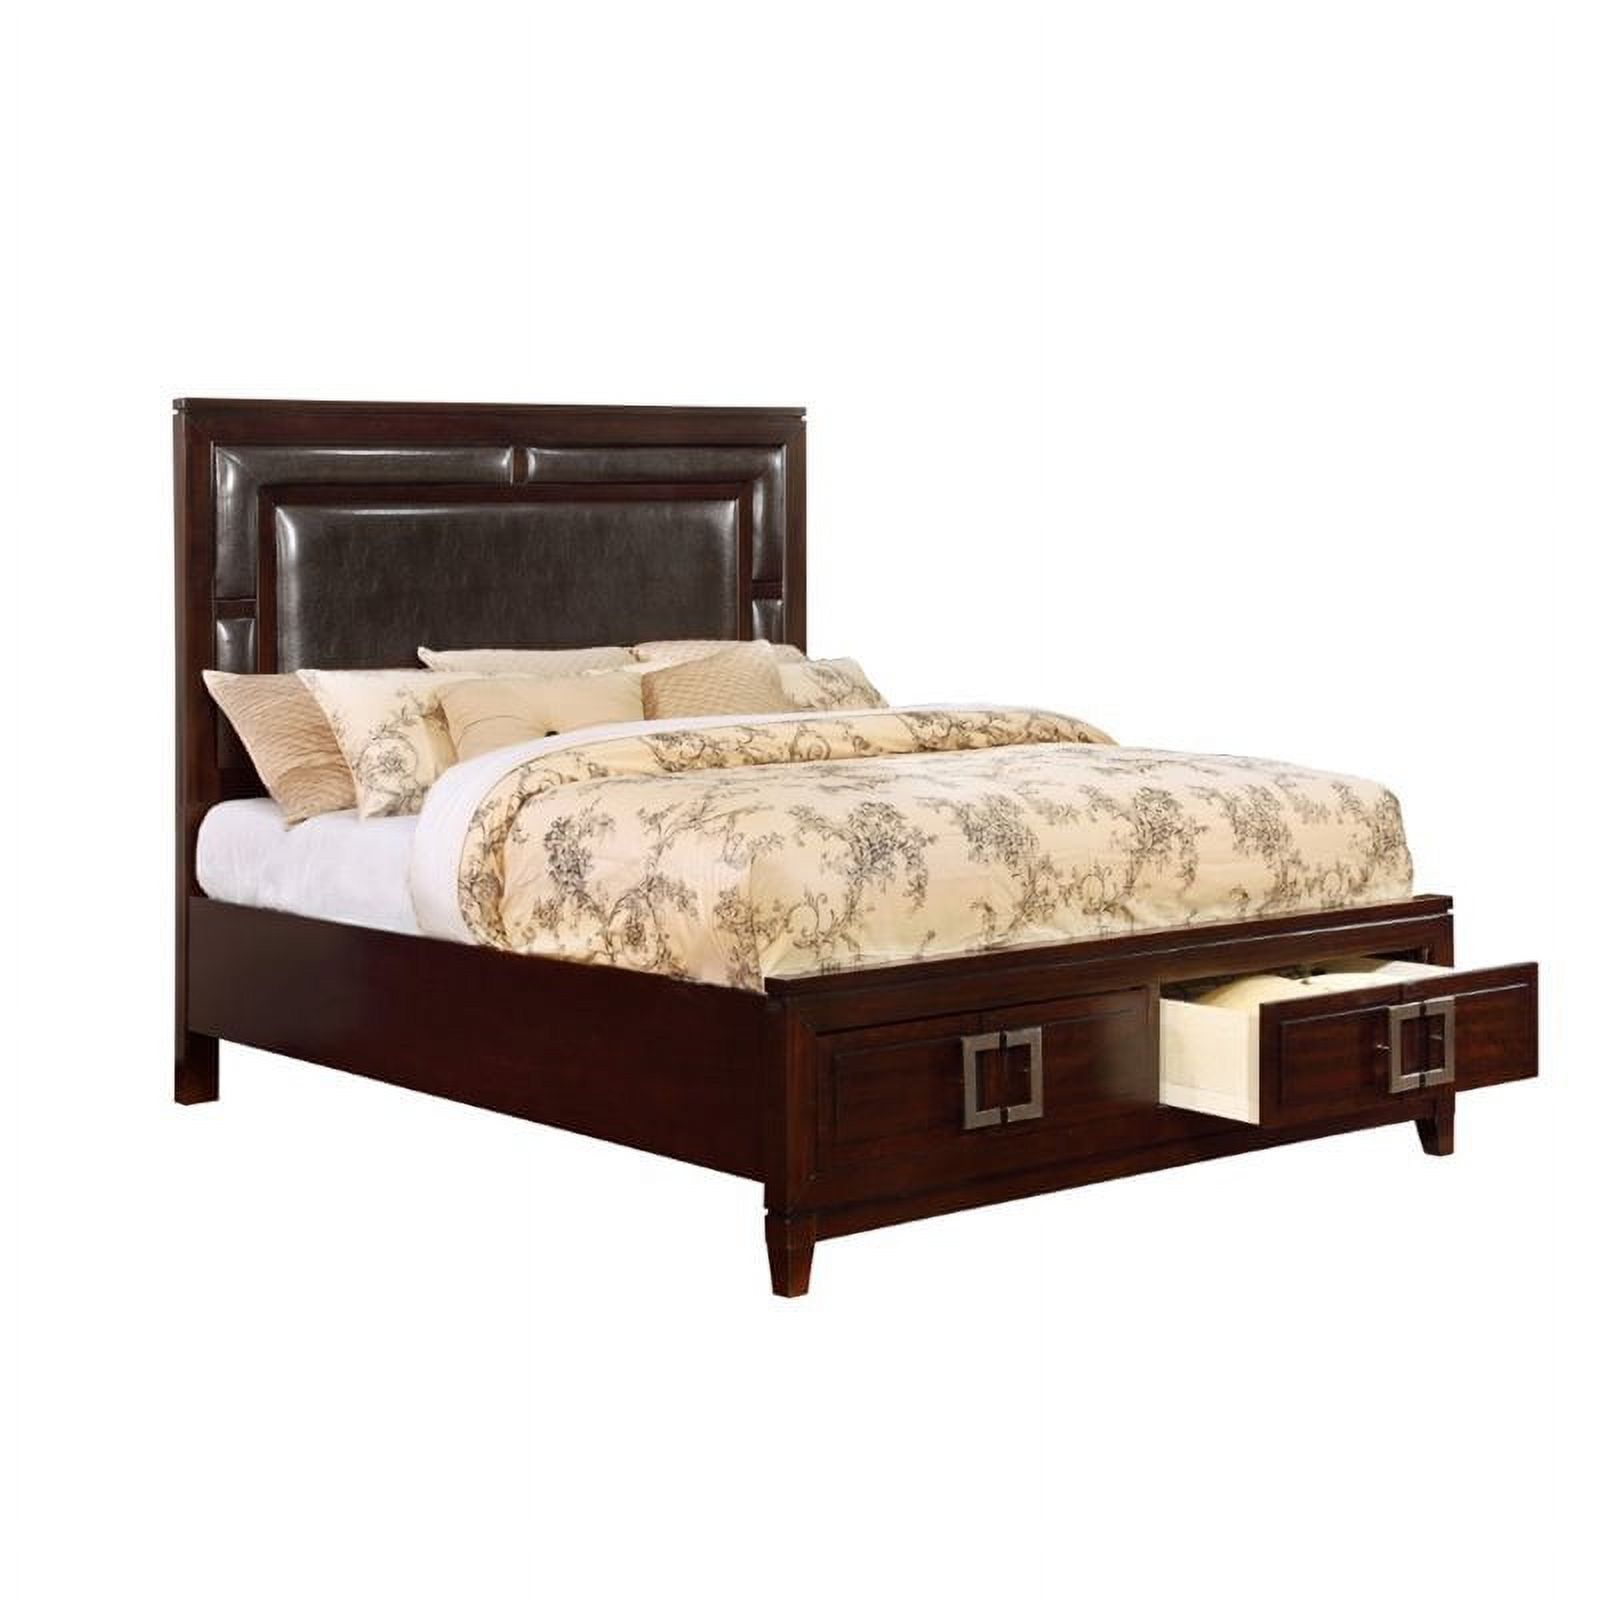 FOA Angelonia 2pc Cherry Solid Wood Bedroom Set - King + Nightstand - image 2 of 7